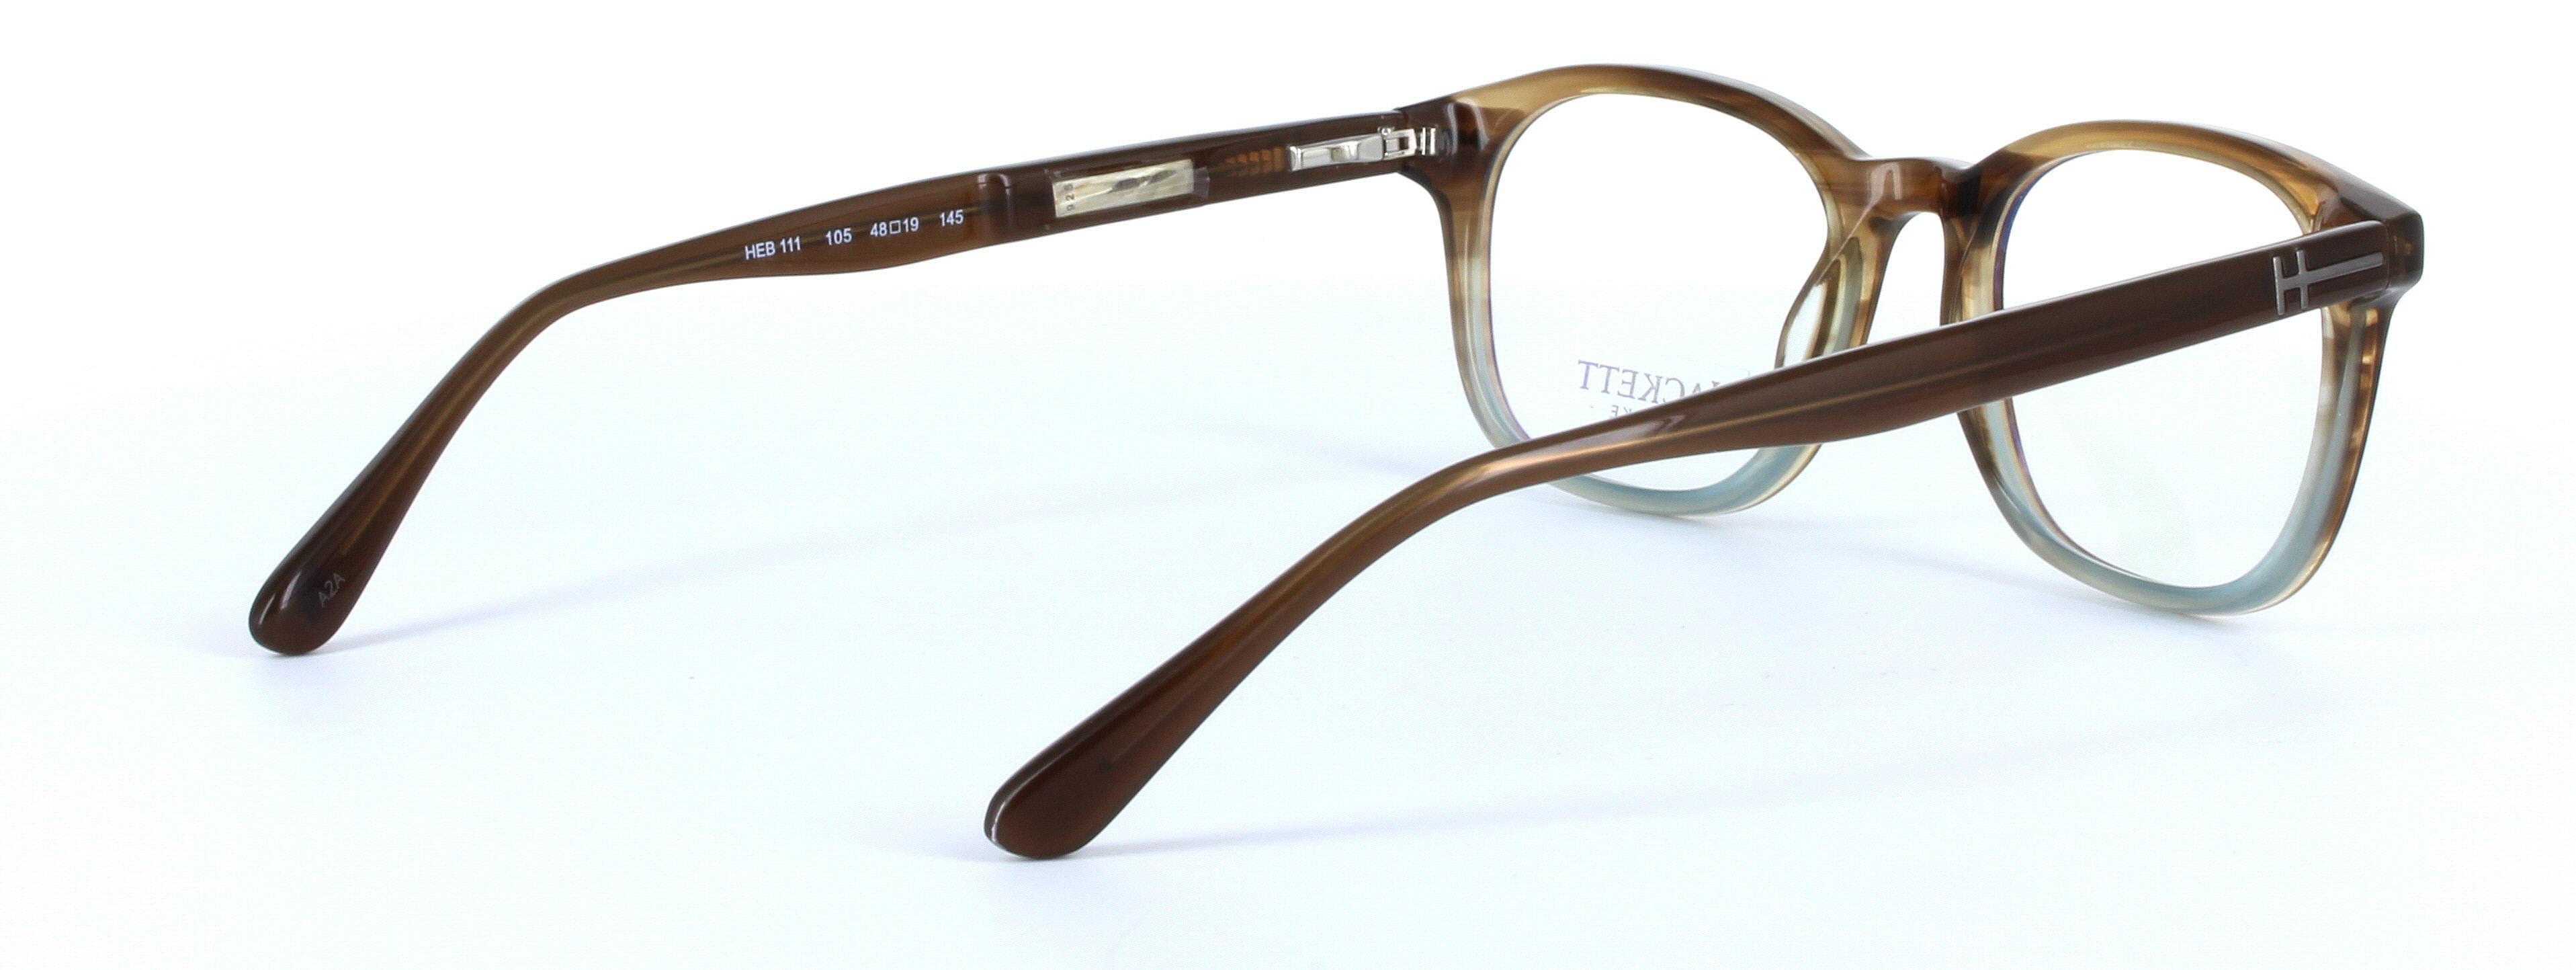 HACKETT BESPOKE (HEB111-105) Brown Full Rim Oval Round Acetate Glasses - Image View 4